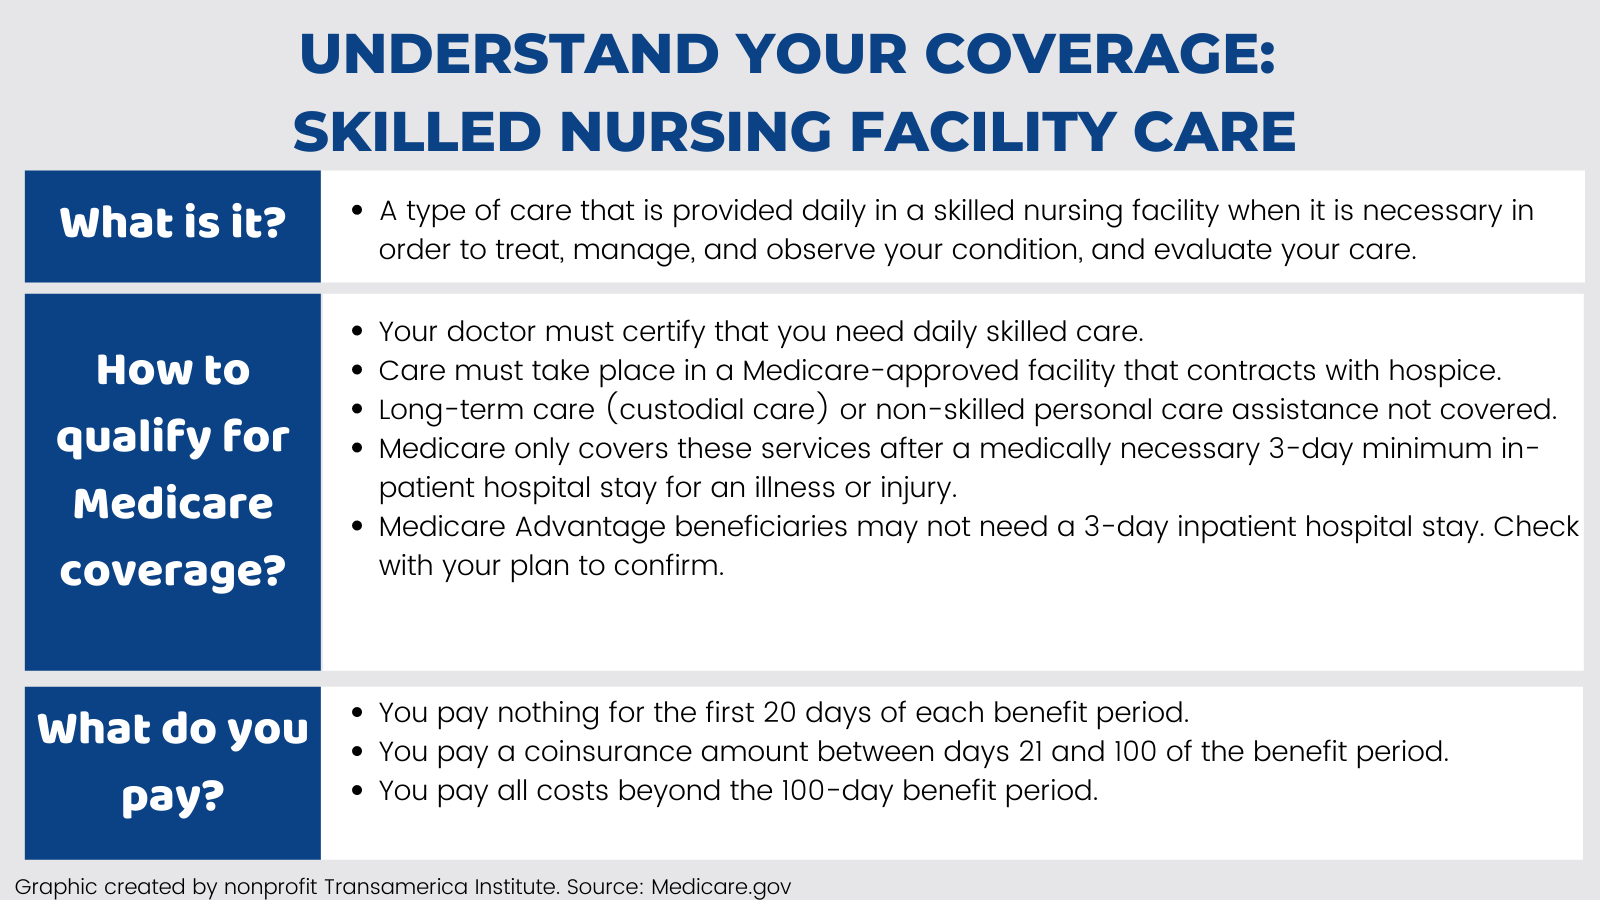 Skilled nursing facility care